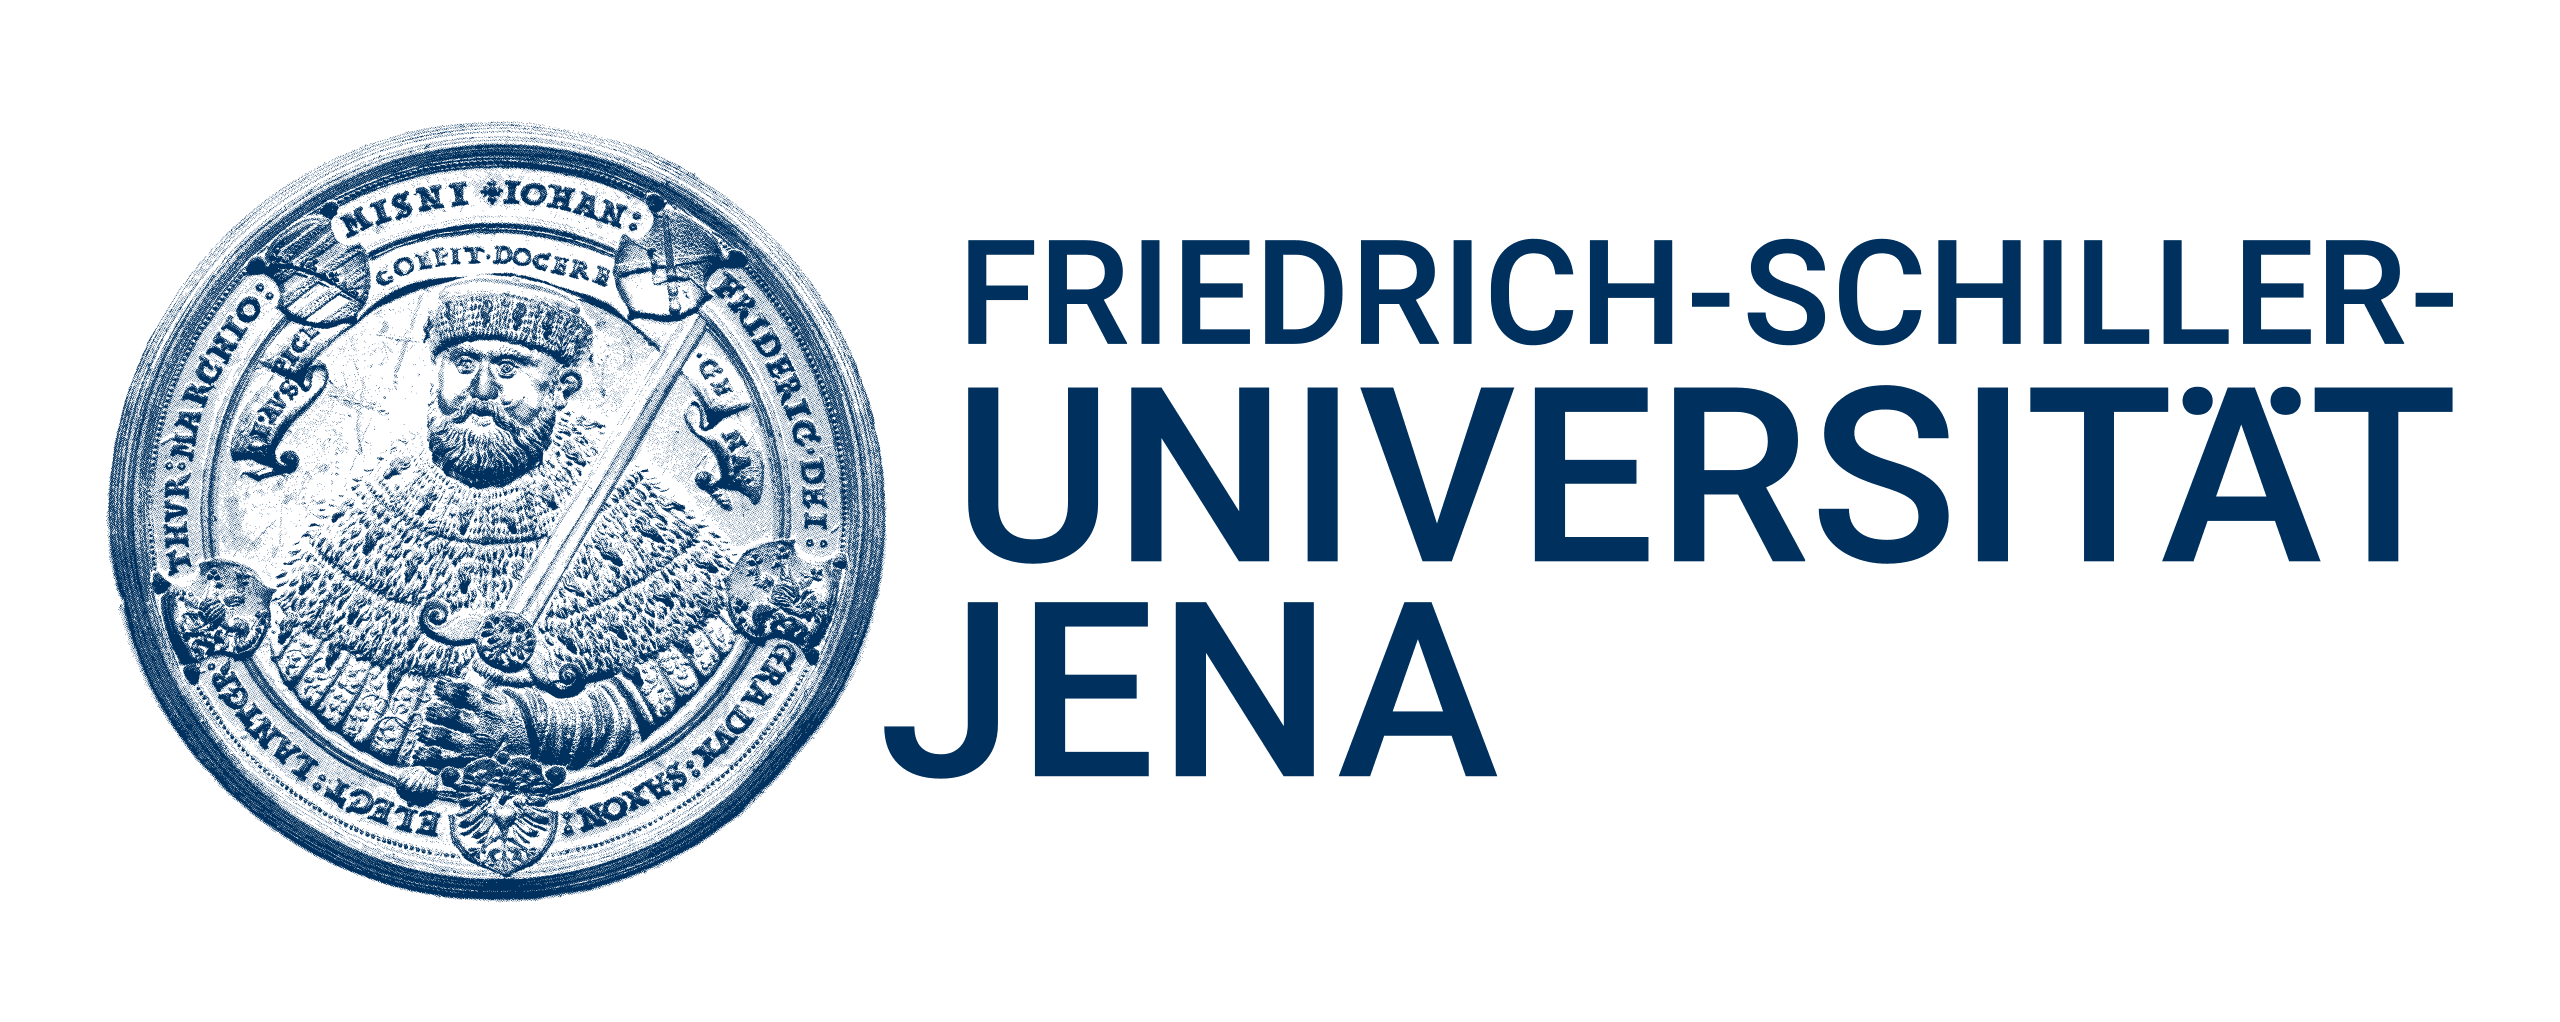 friedrich-schiller-university-jena-c869b39044-cover-picture